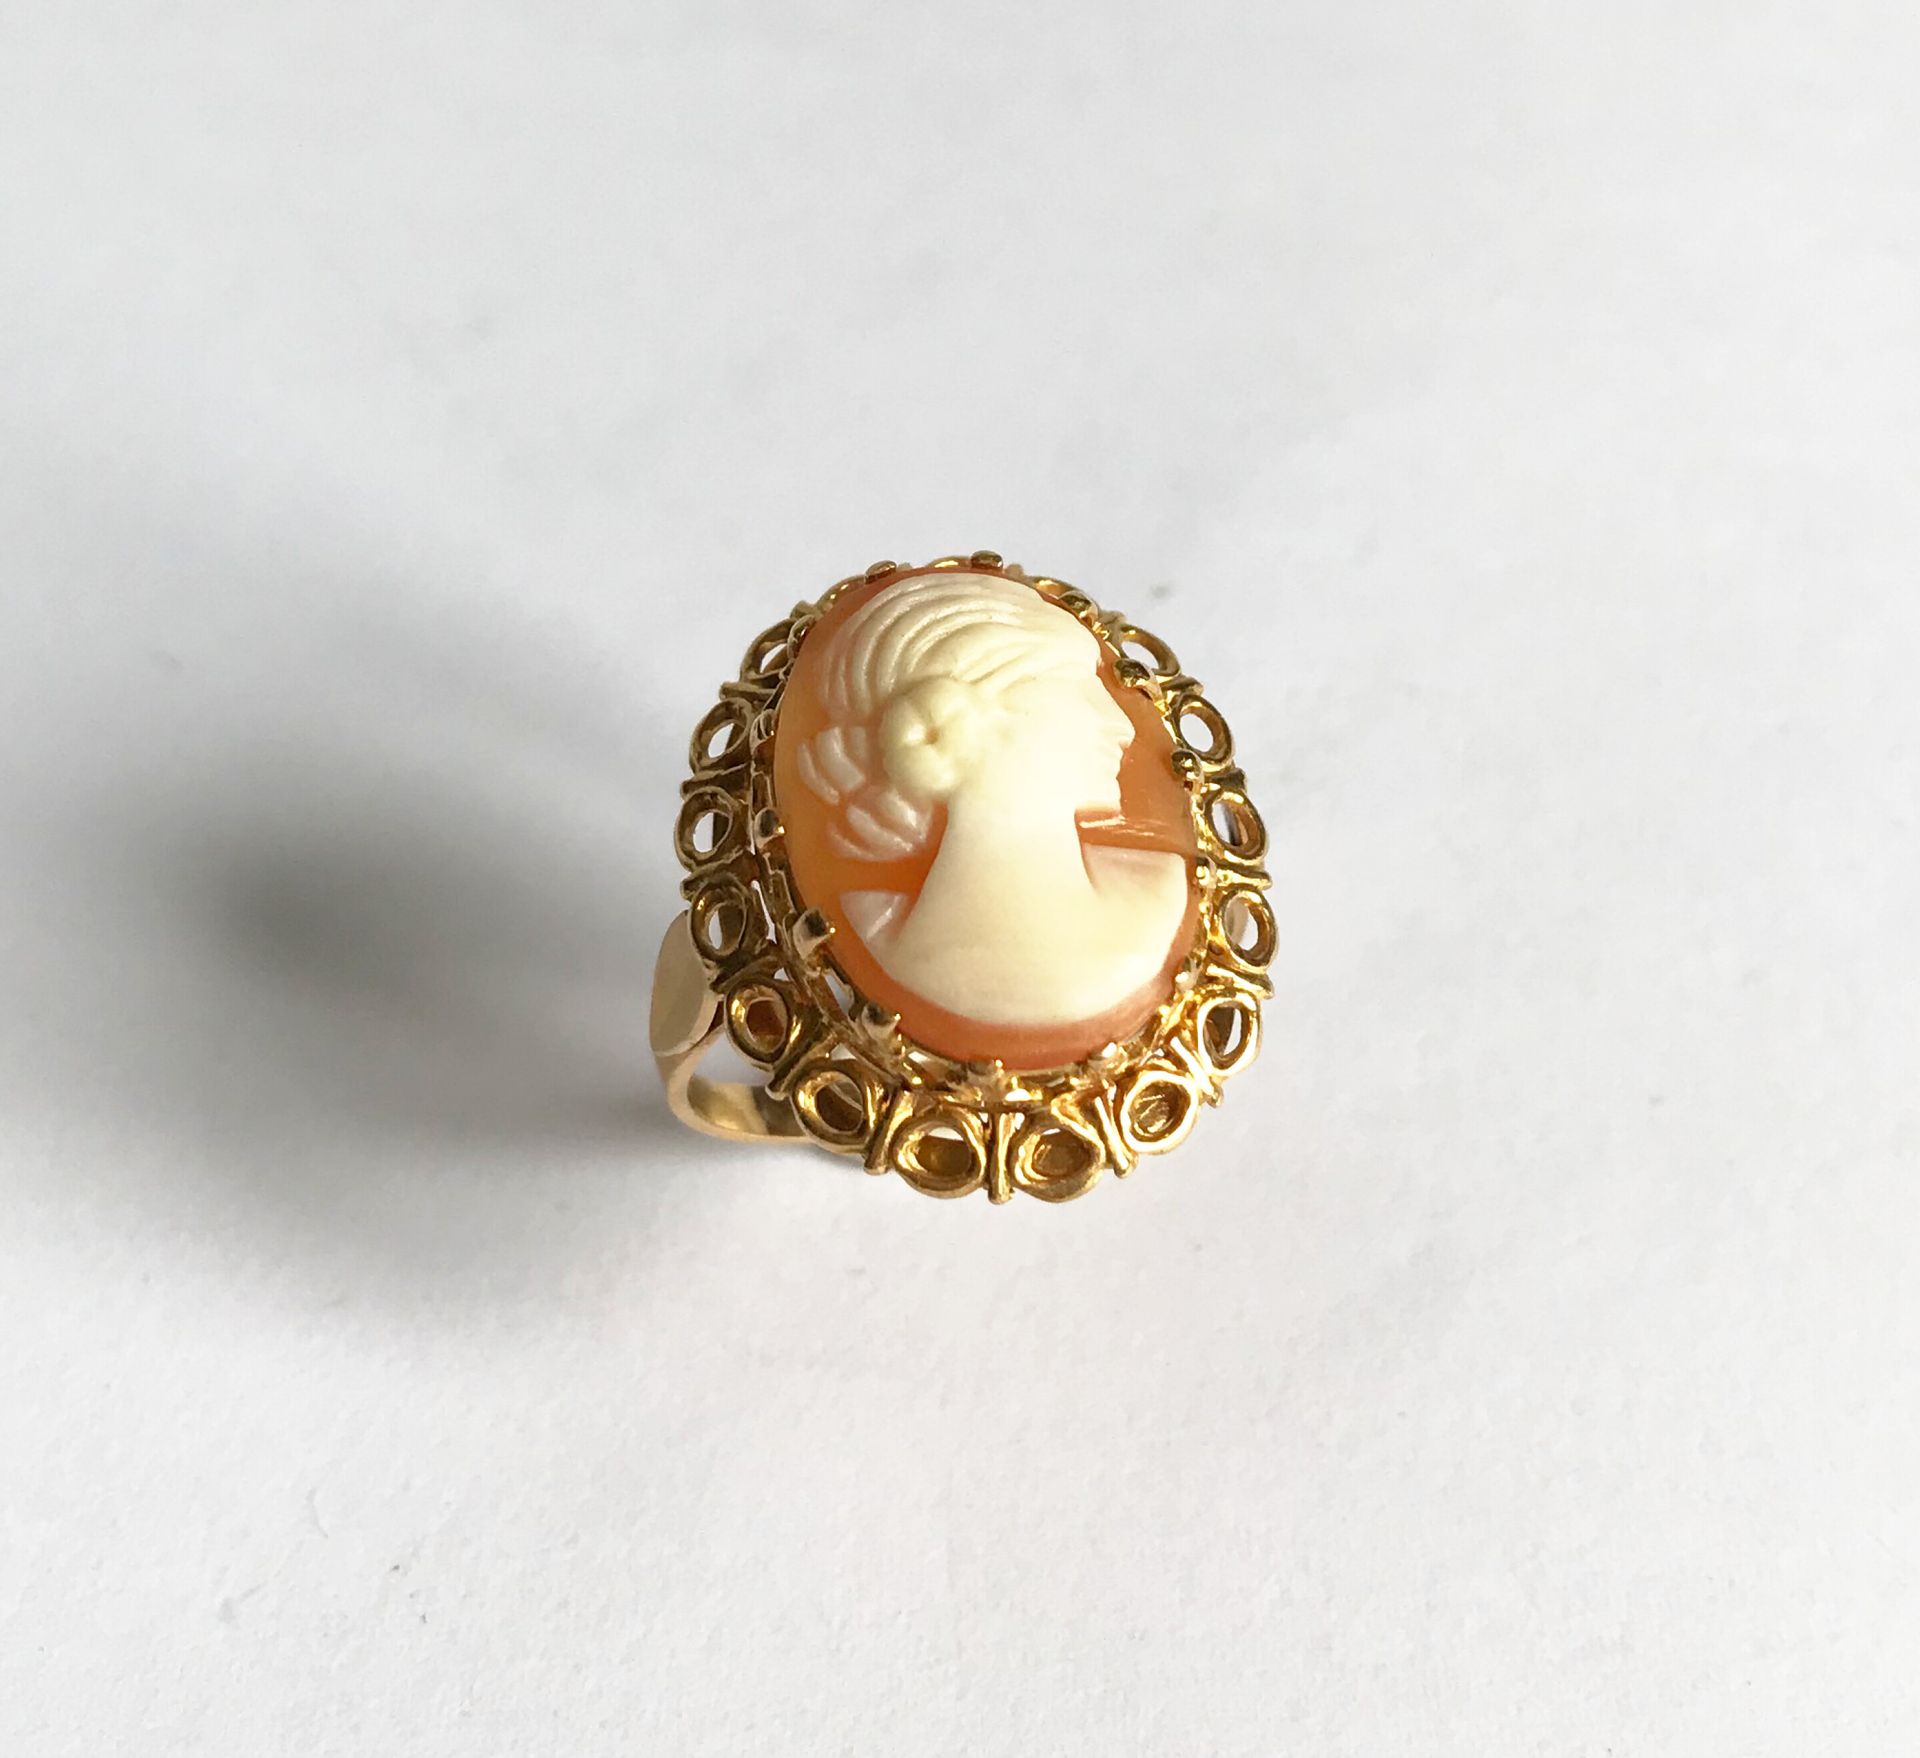 Null 镂空边框的黄金戒指，边框上装饰着一个年轻女子的浮雕轮廓。

毛重4.3克。